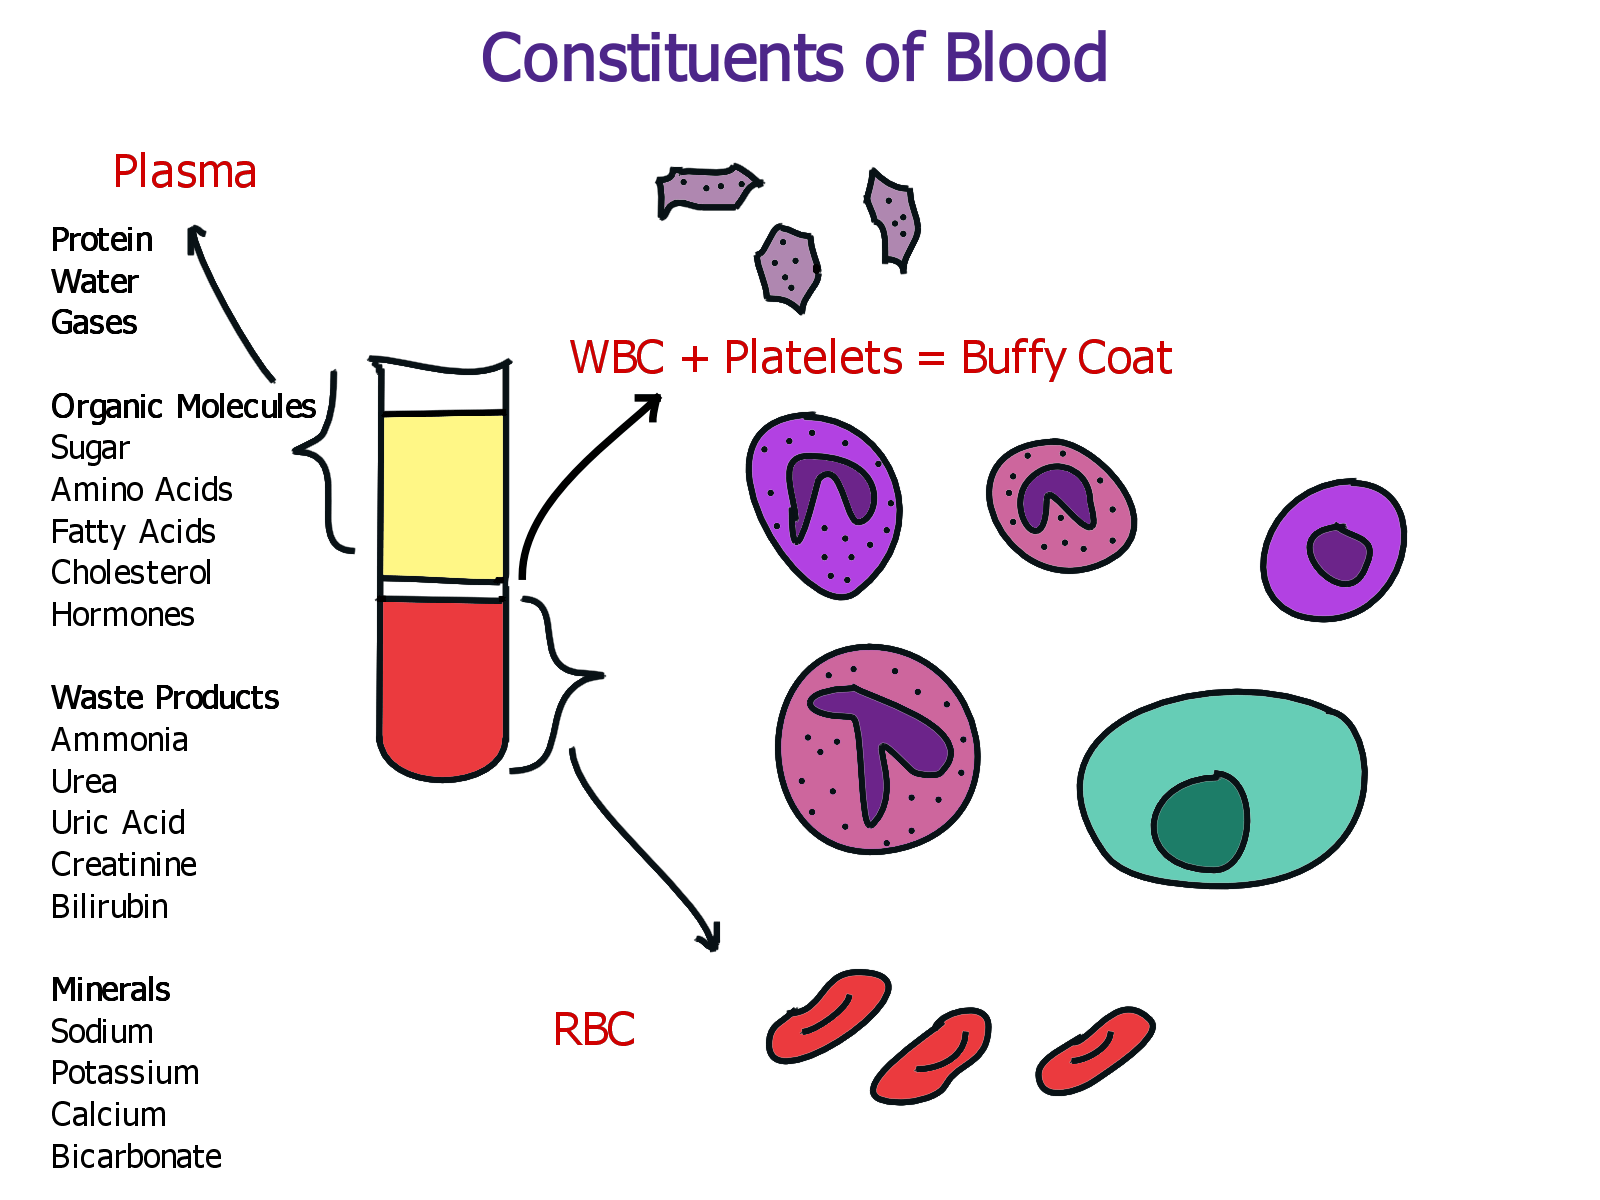 Blood Constituents